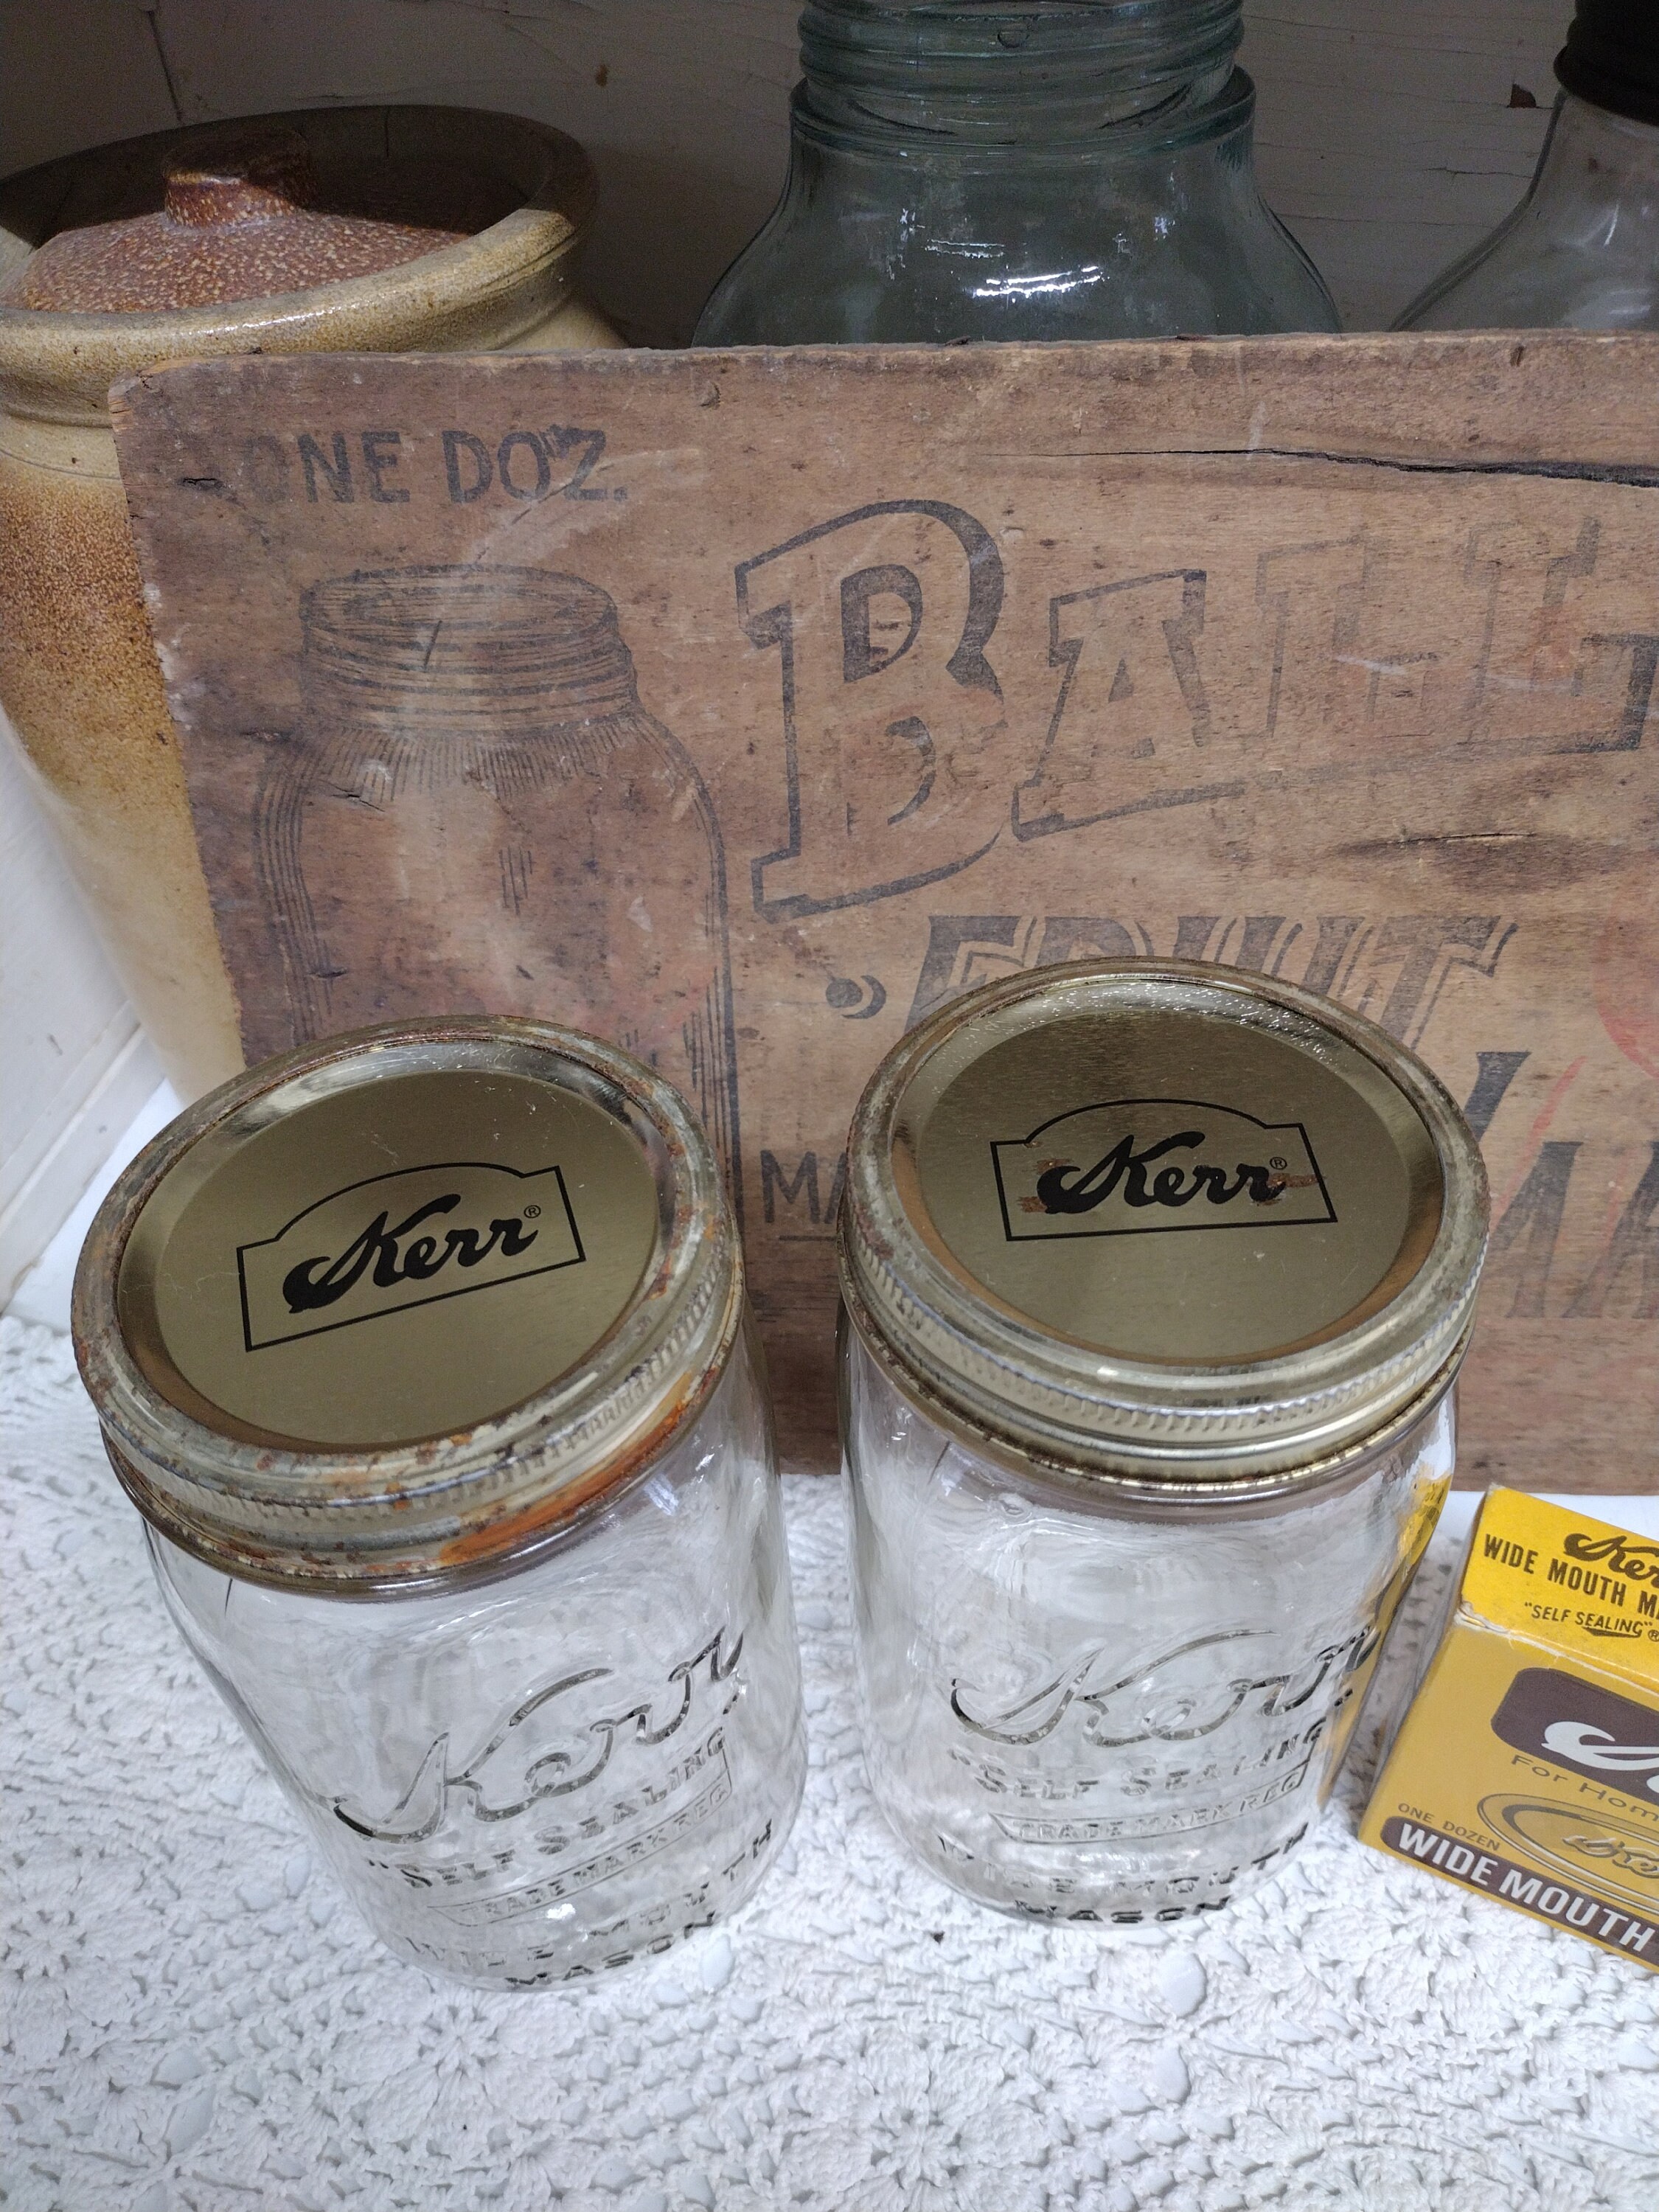 Vintage Kerr Wide Mouth Self Sealing Mason Jar 1 pint